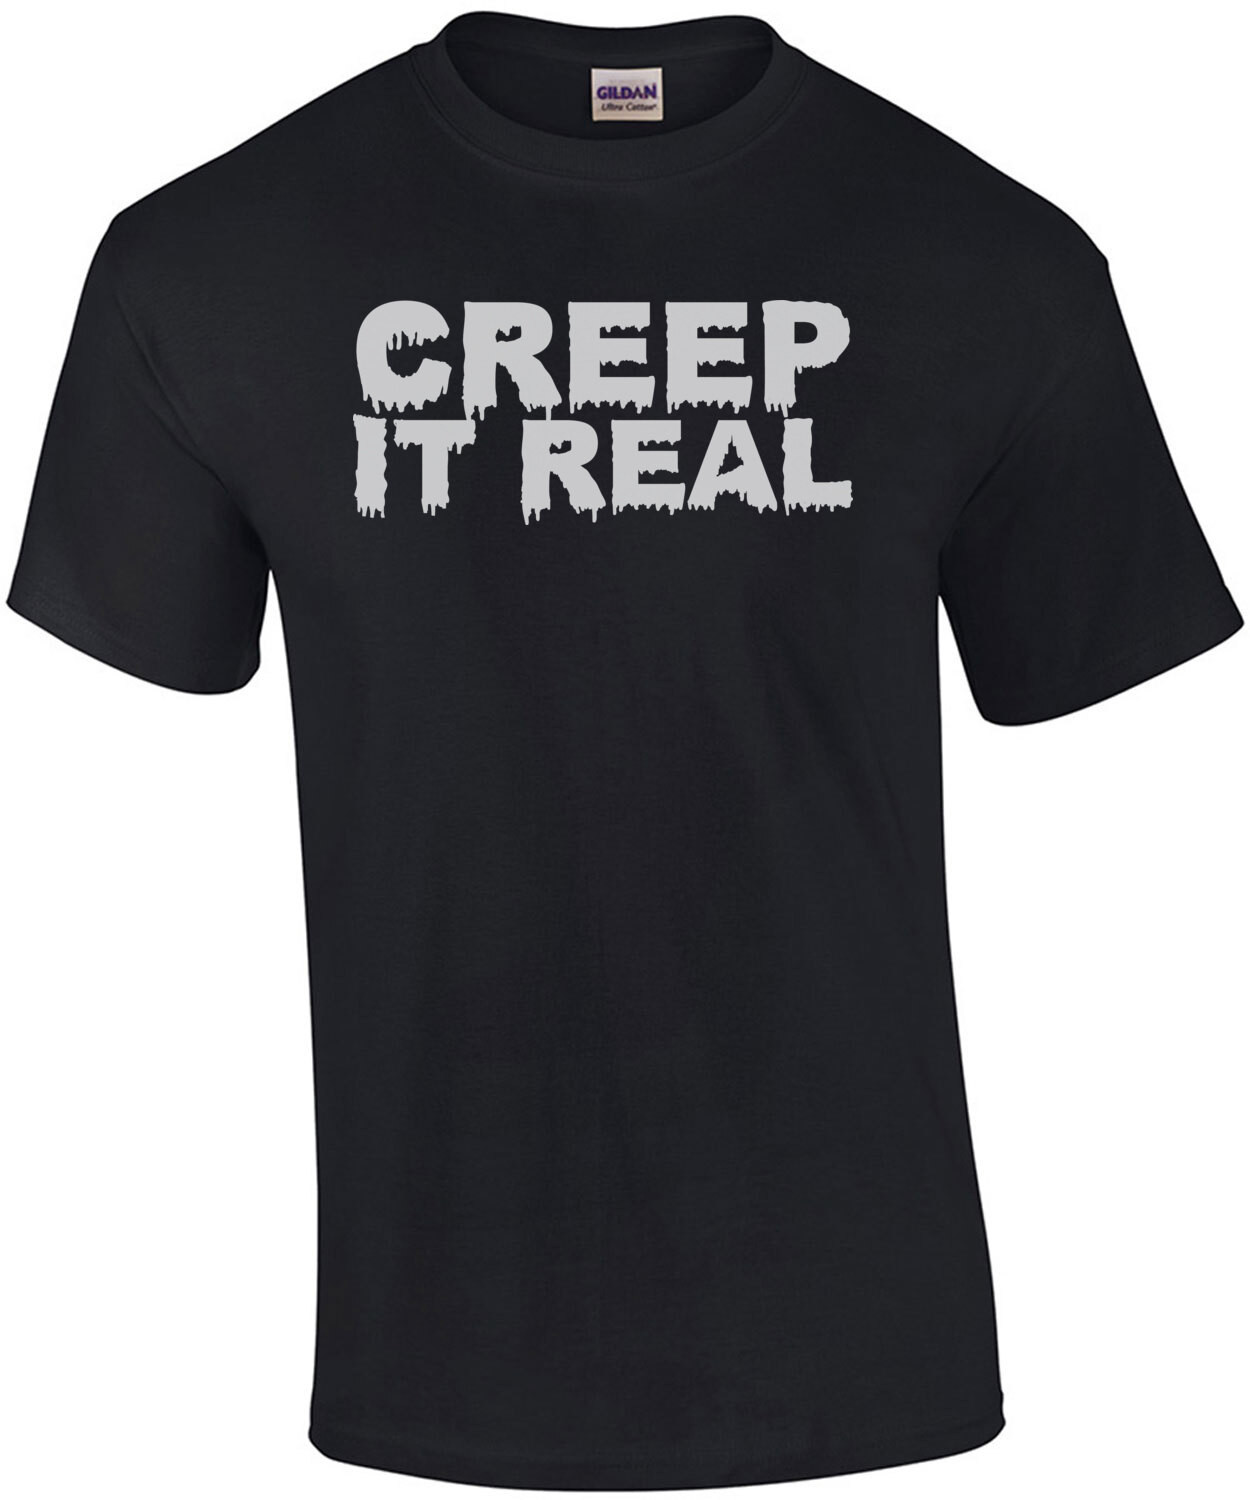 Creep it real - funny halloween t-shirt